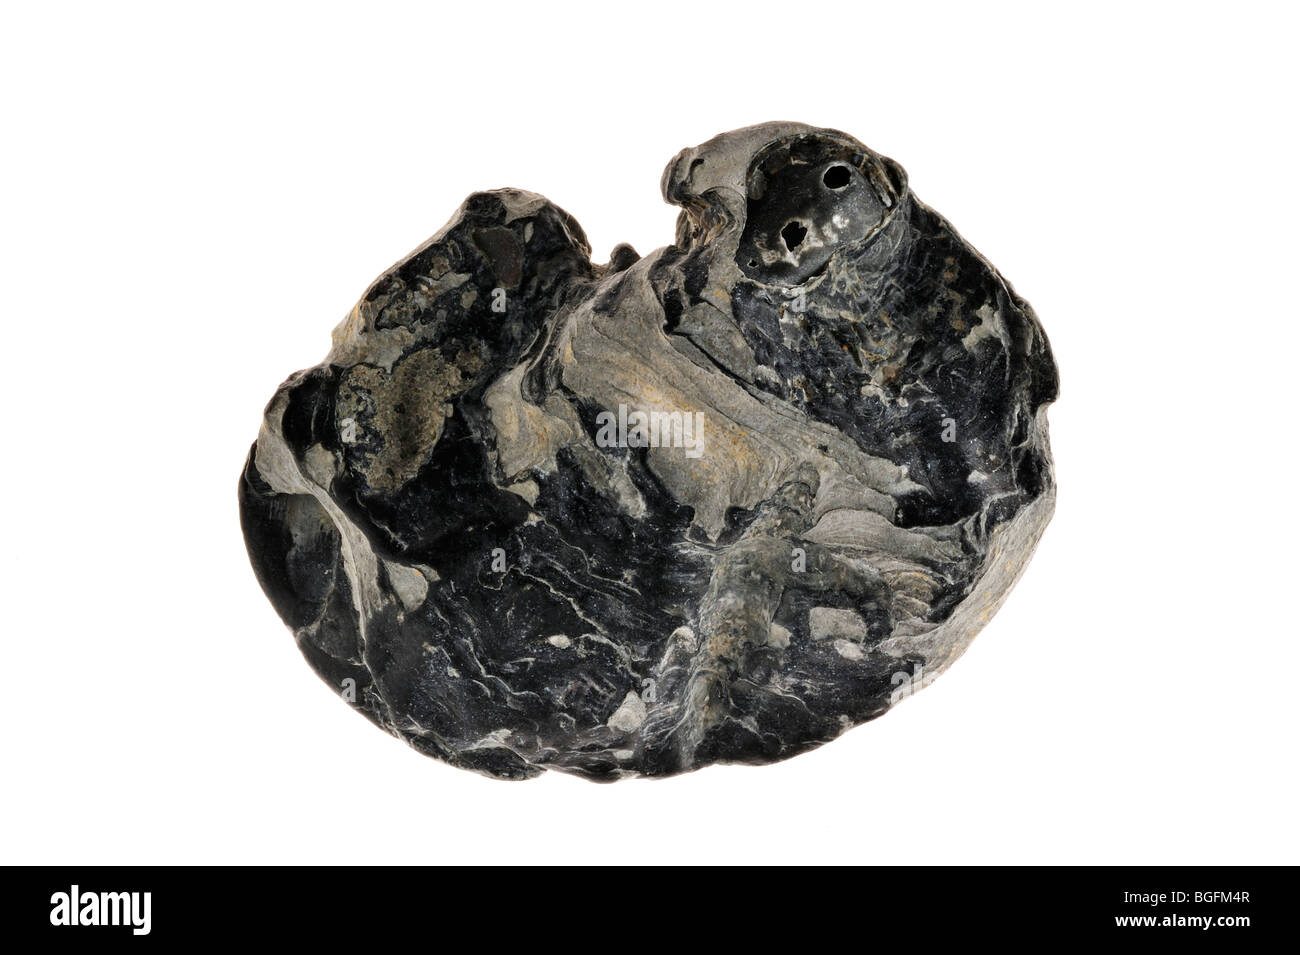 Lower valve of Saddle oyster / Jingle shell (Anomia ephippium), Brittany, France Stock Photo